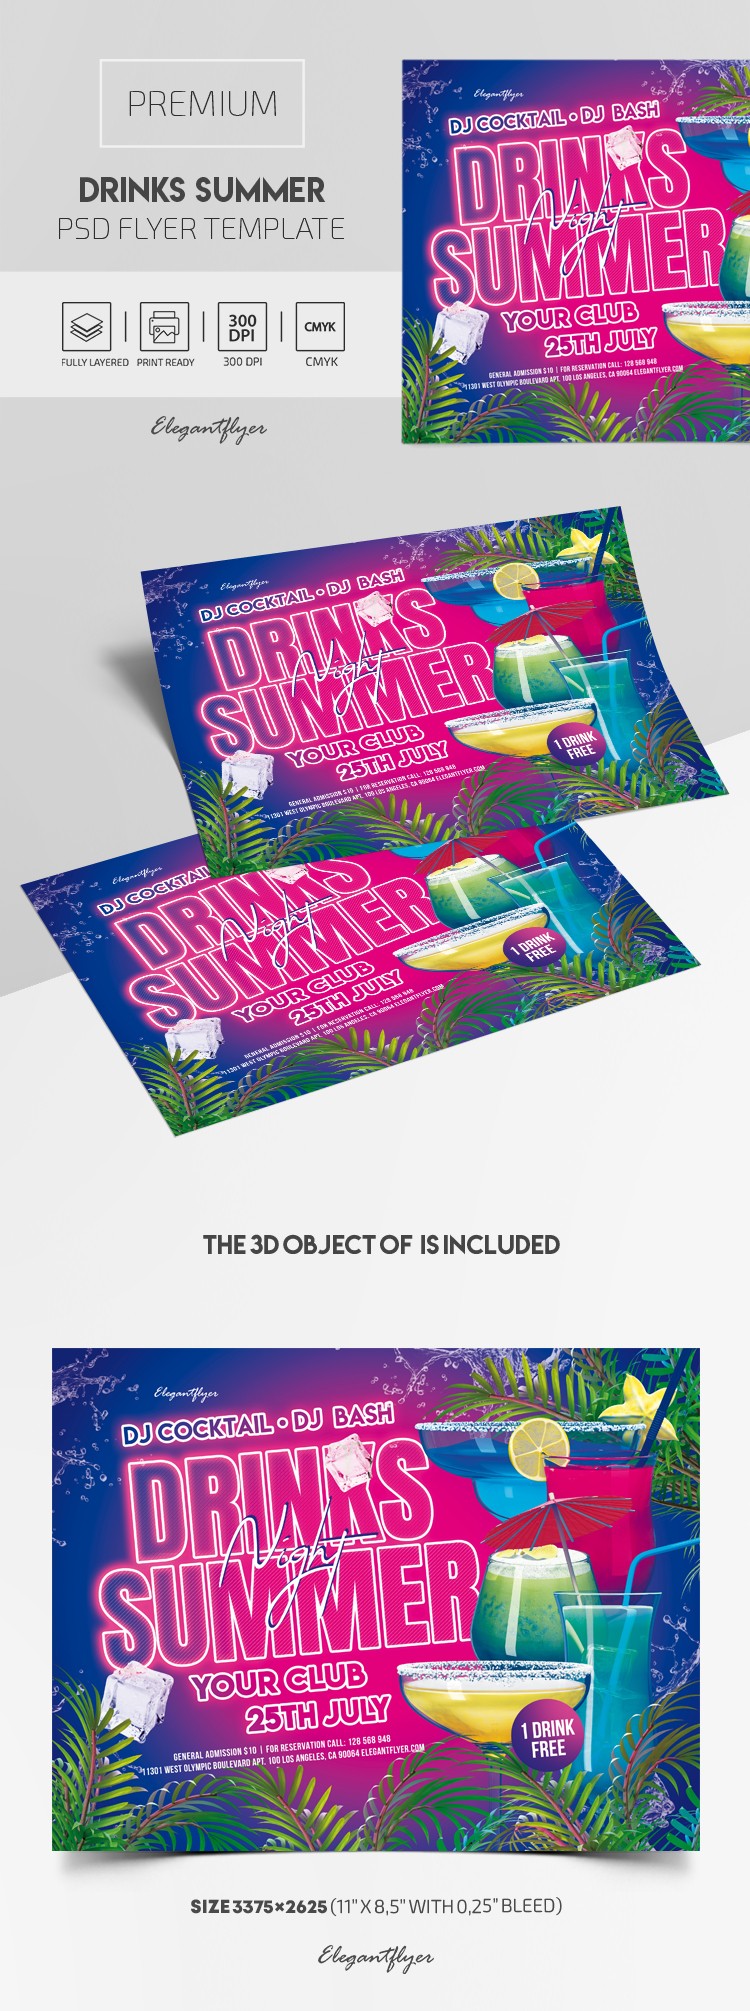 Drinks Summer Flyer by ElegantFlyer